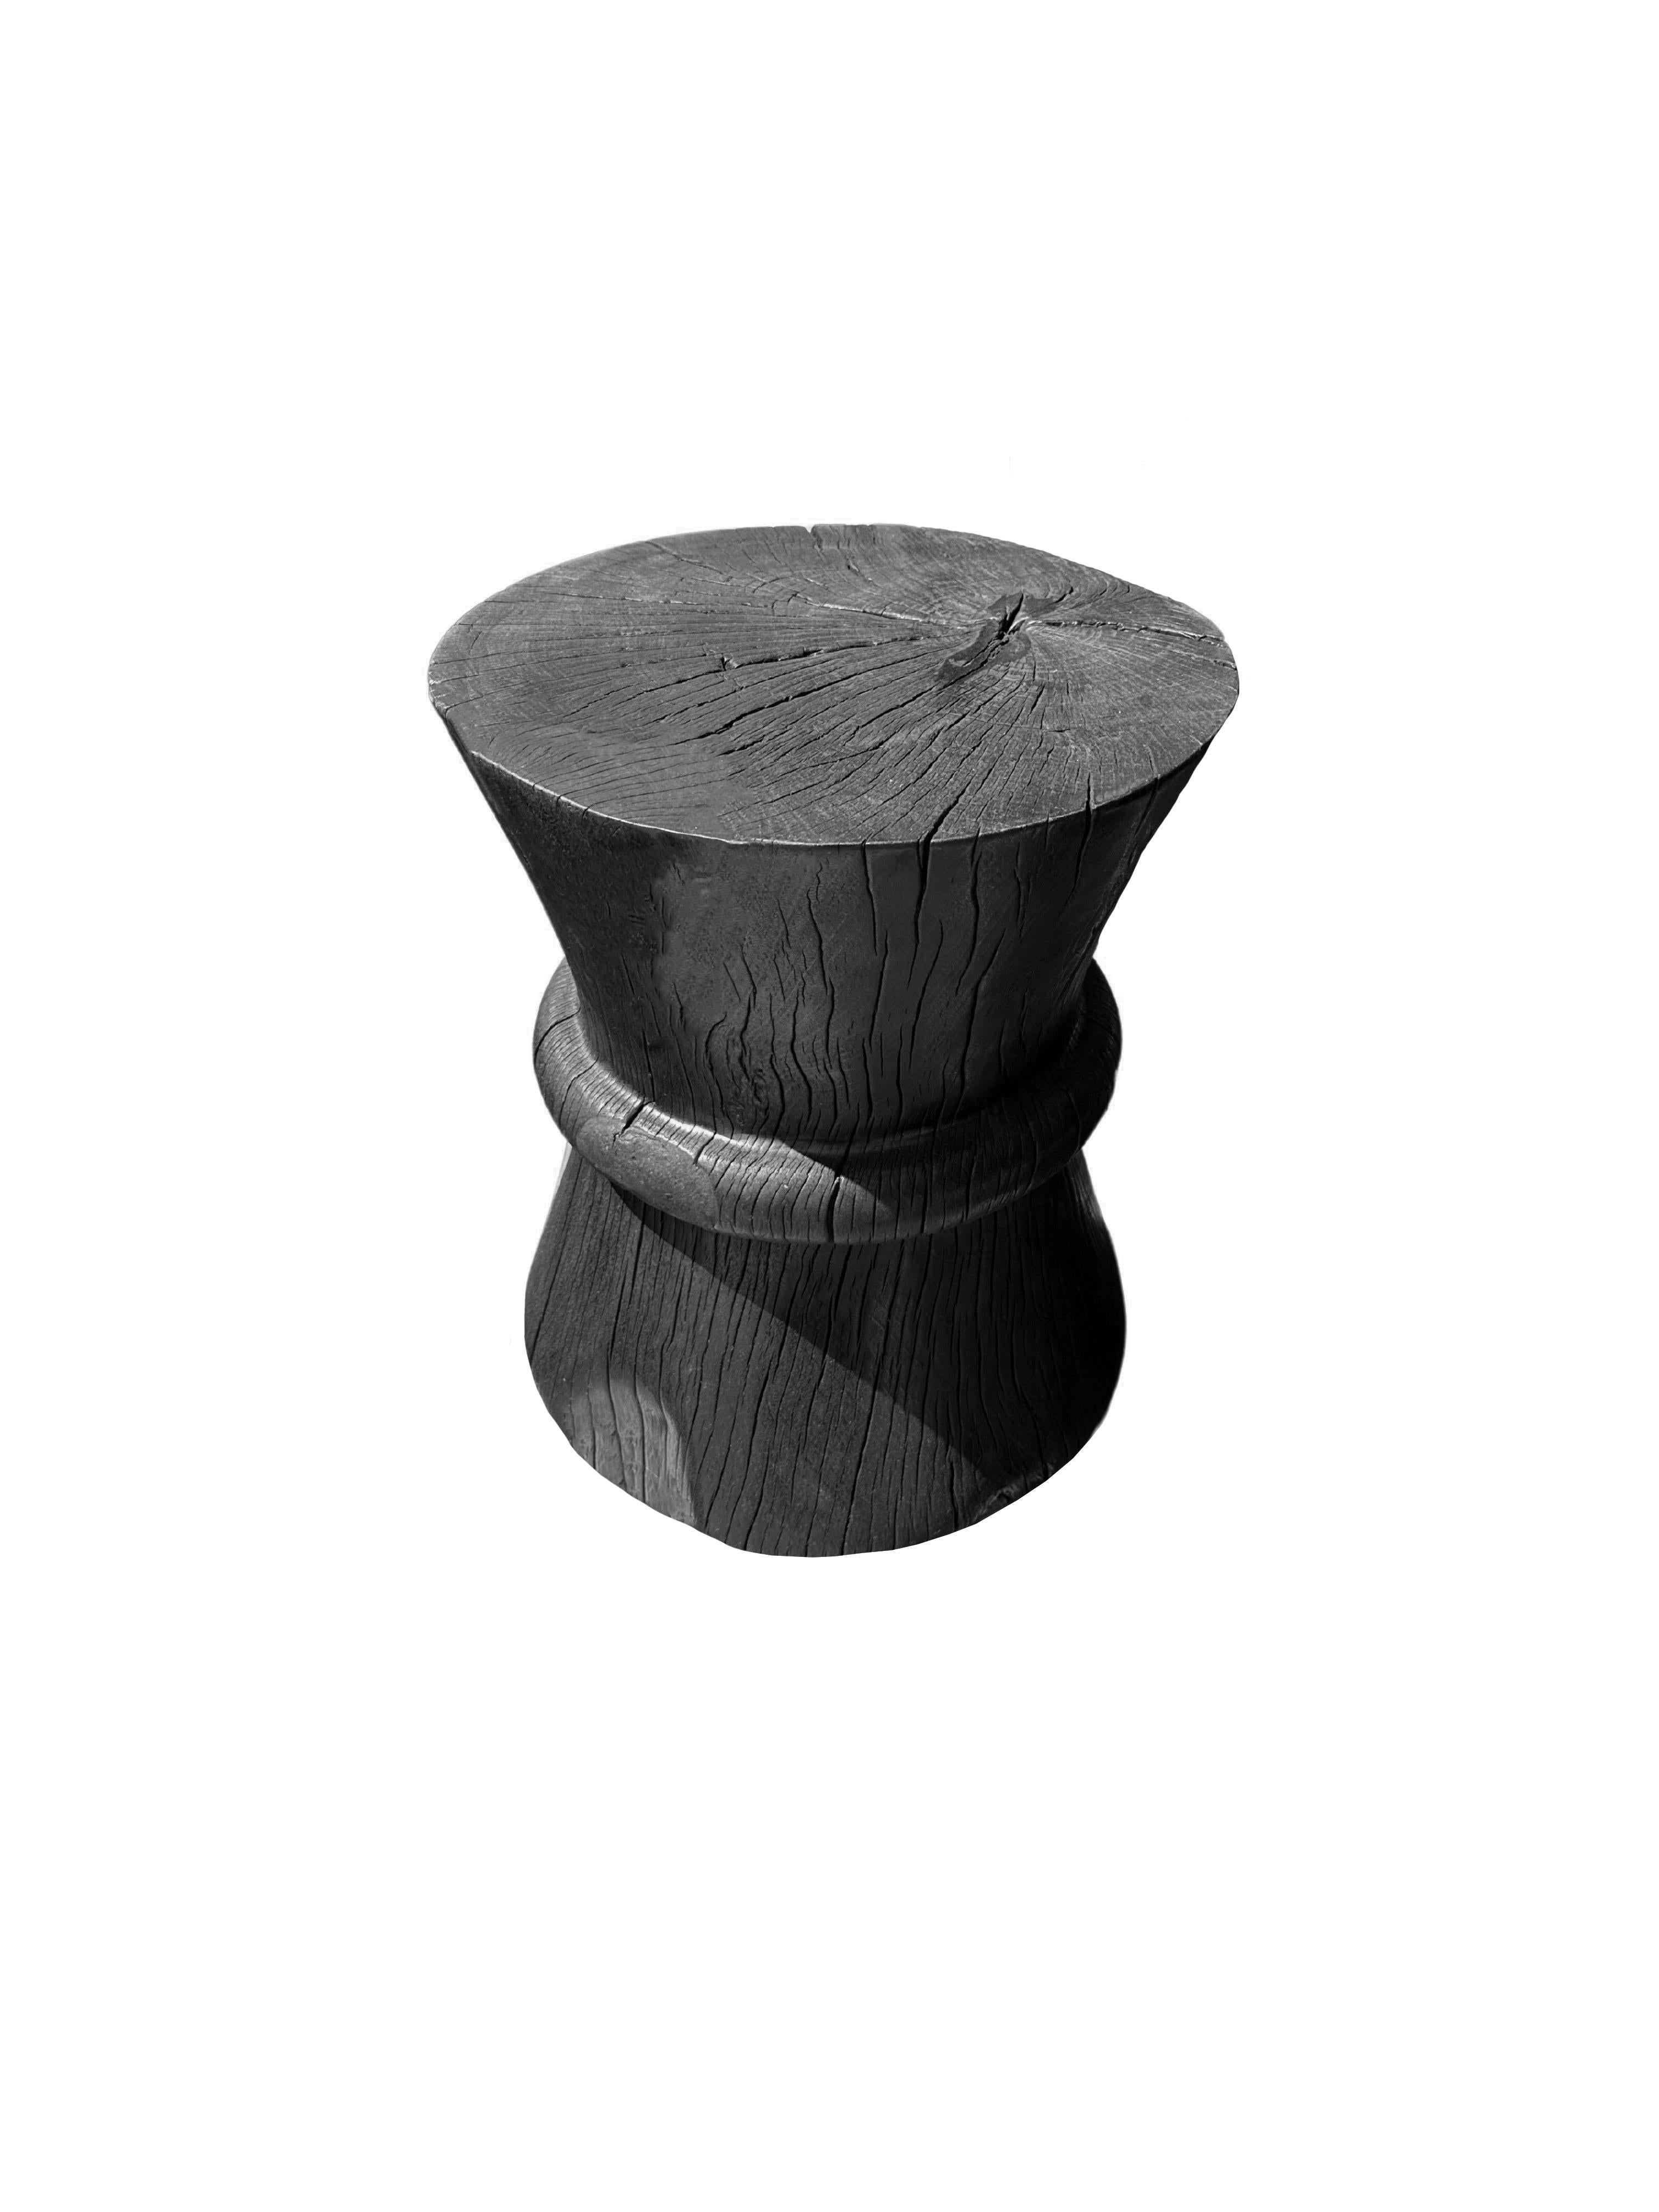 Organic Modern Sculptural Solid Tamarind Wood Table, Modern Organic, Burnt Finish For Sale